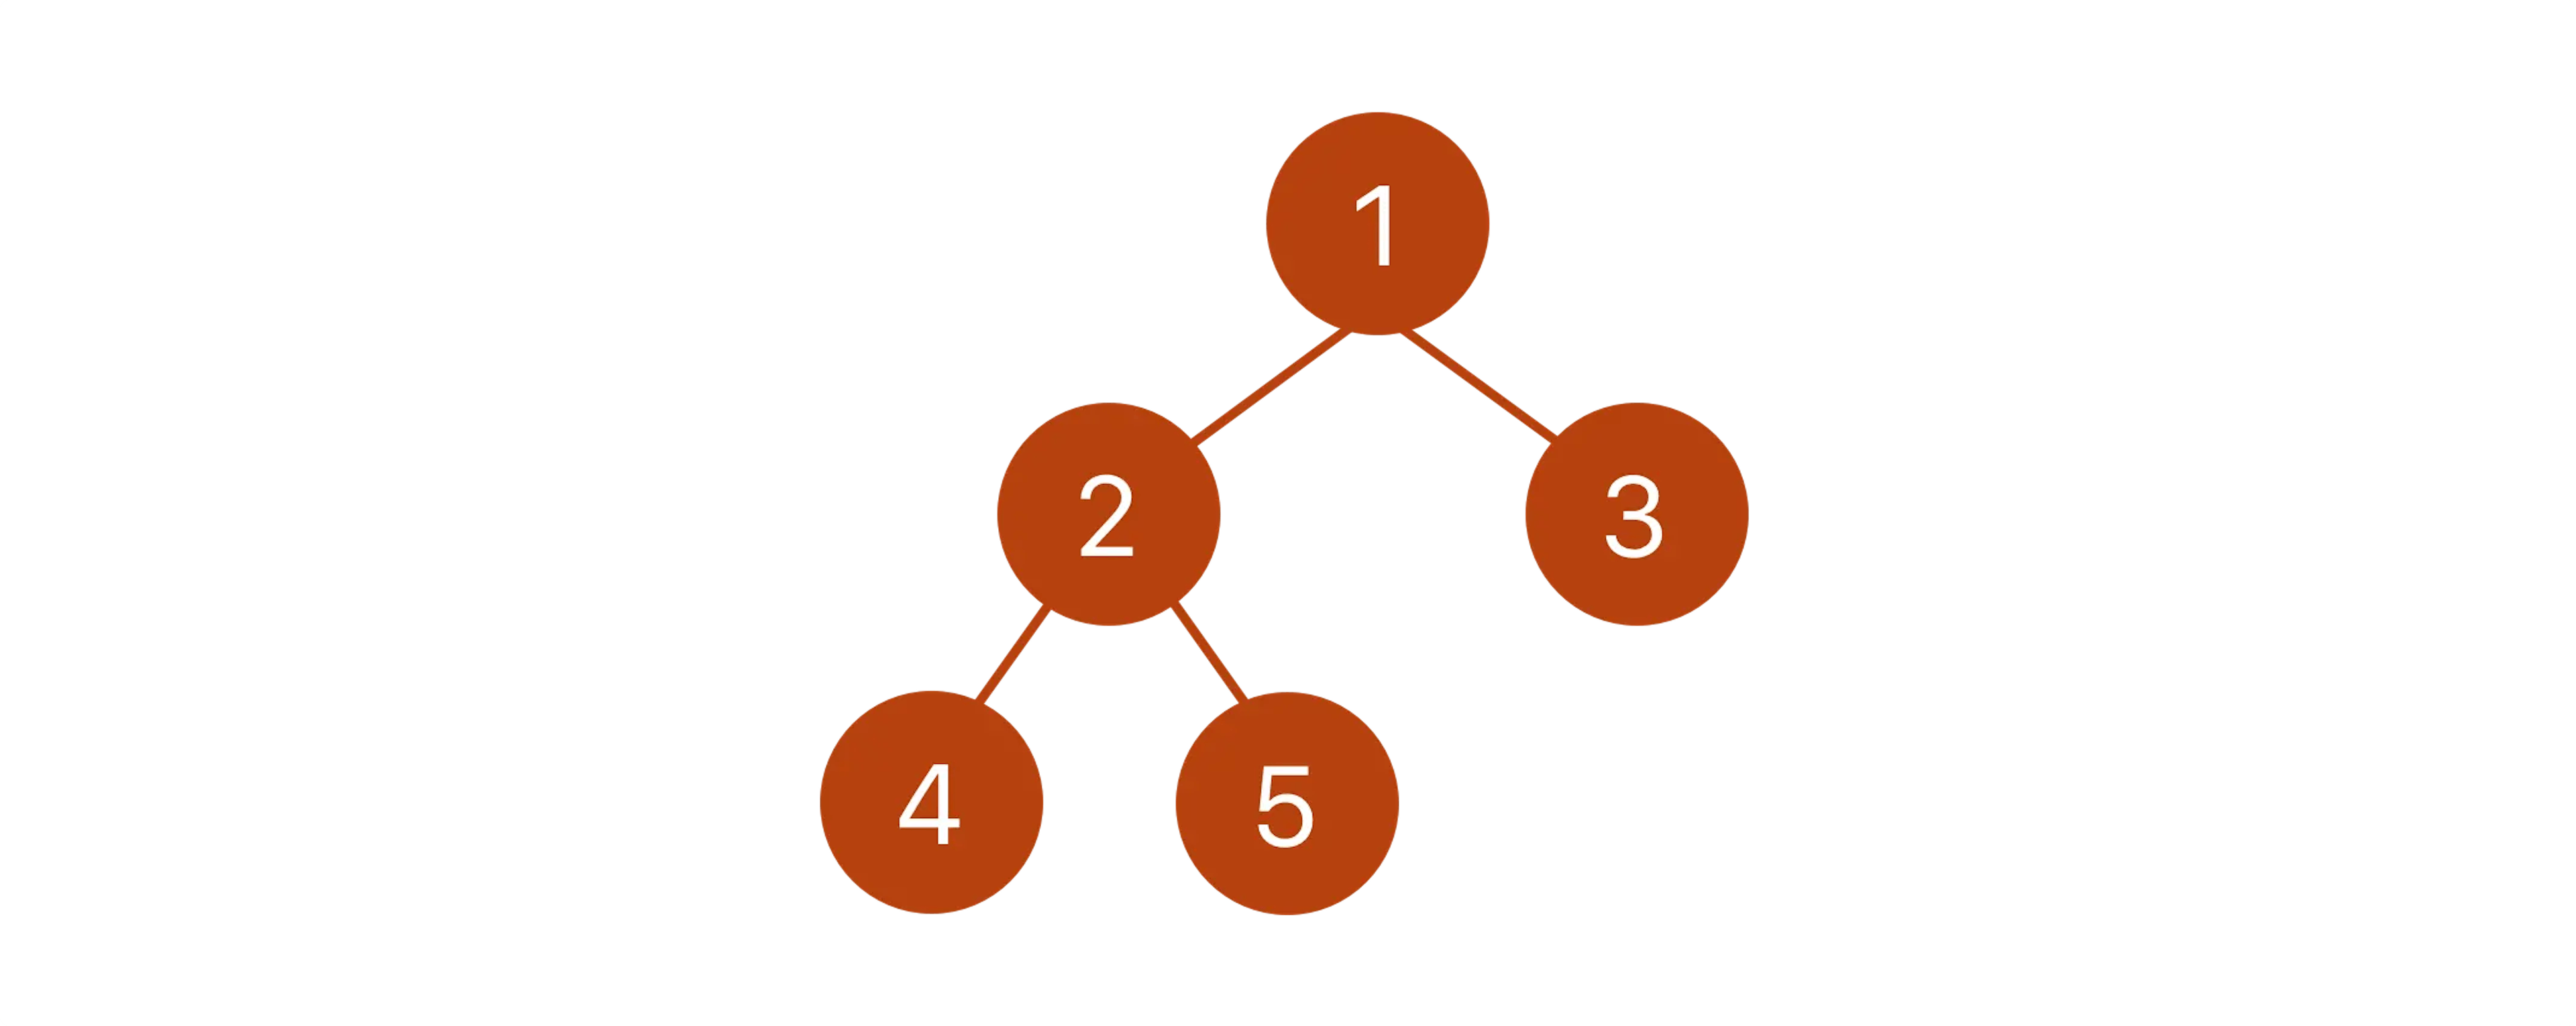 A simple Binary Tree example